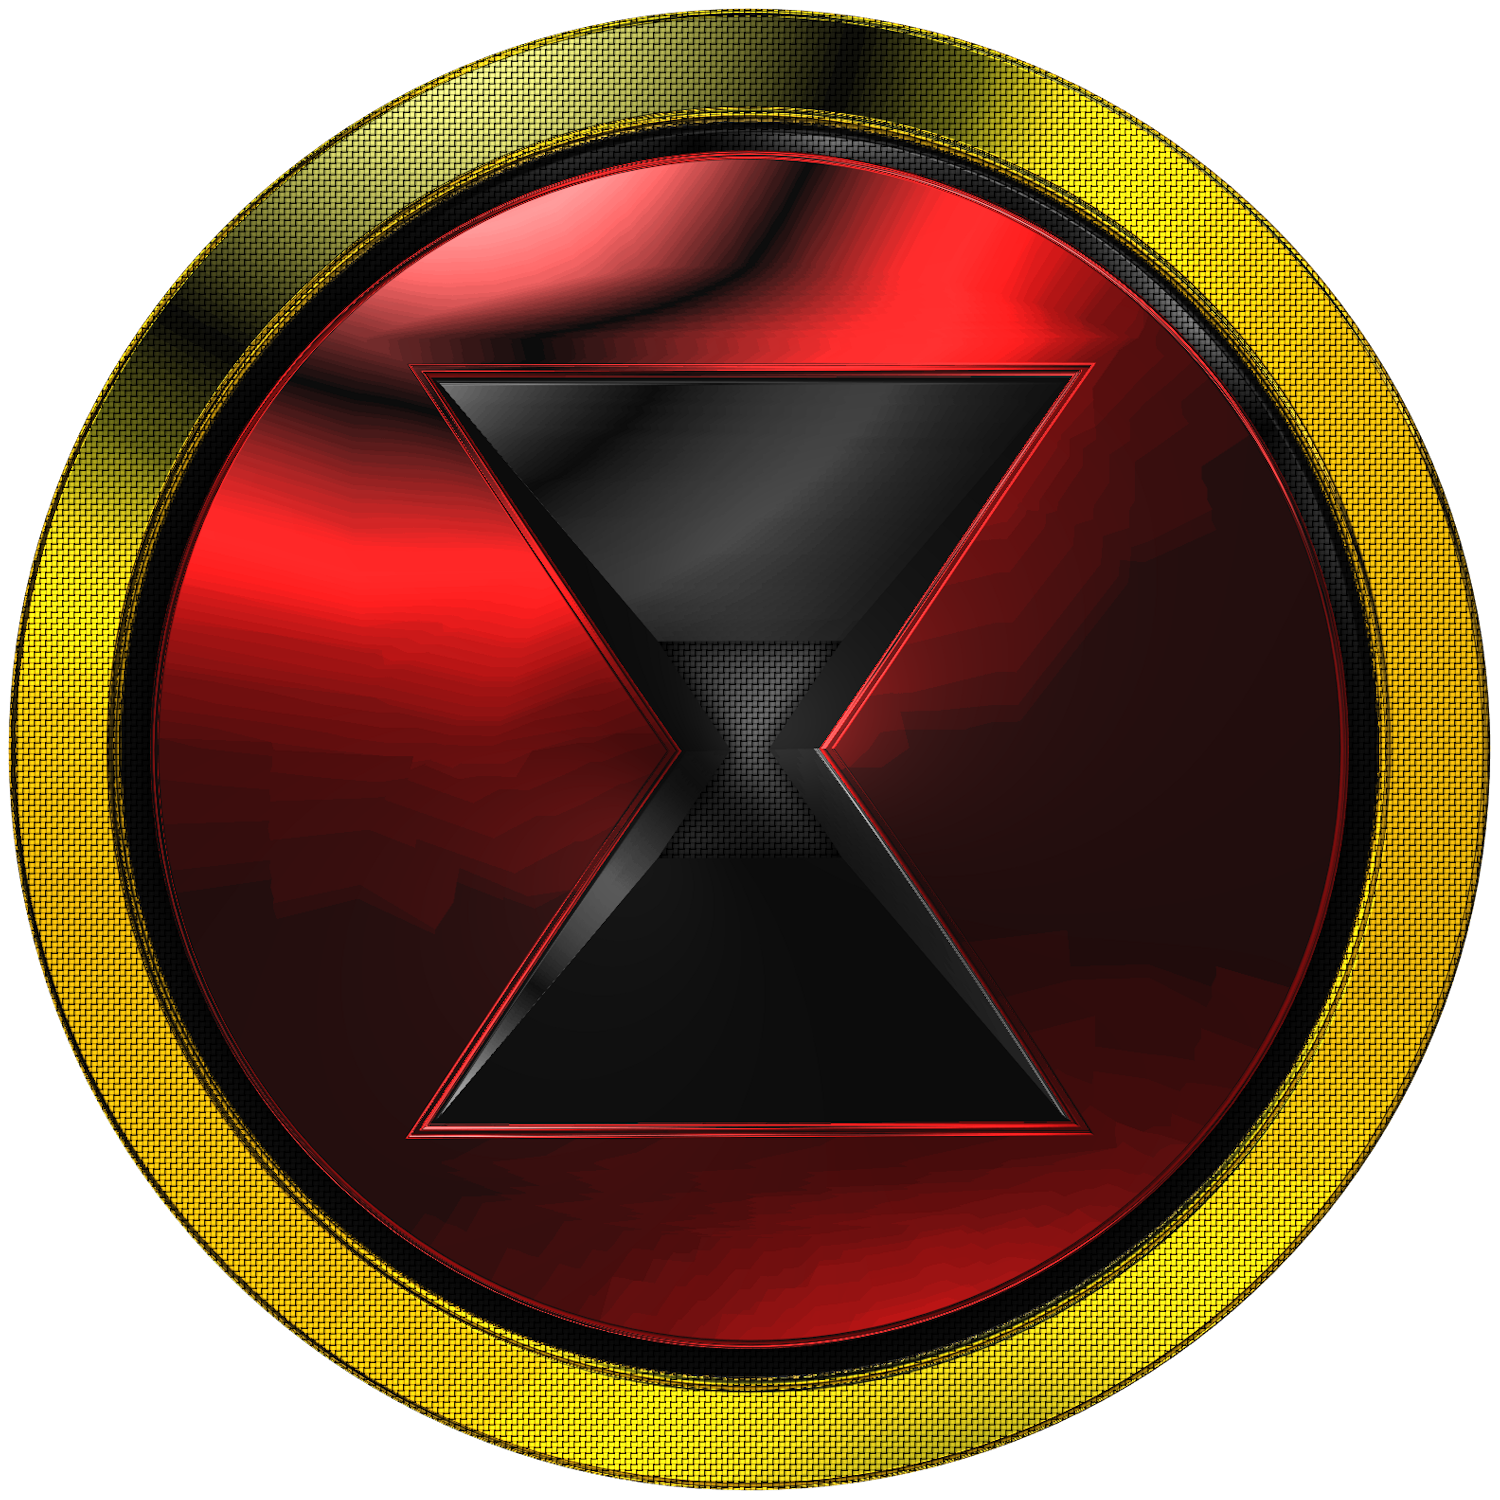 The Black Widow 3D Logo 02 by KingTracy on DeviantArt